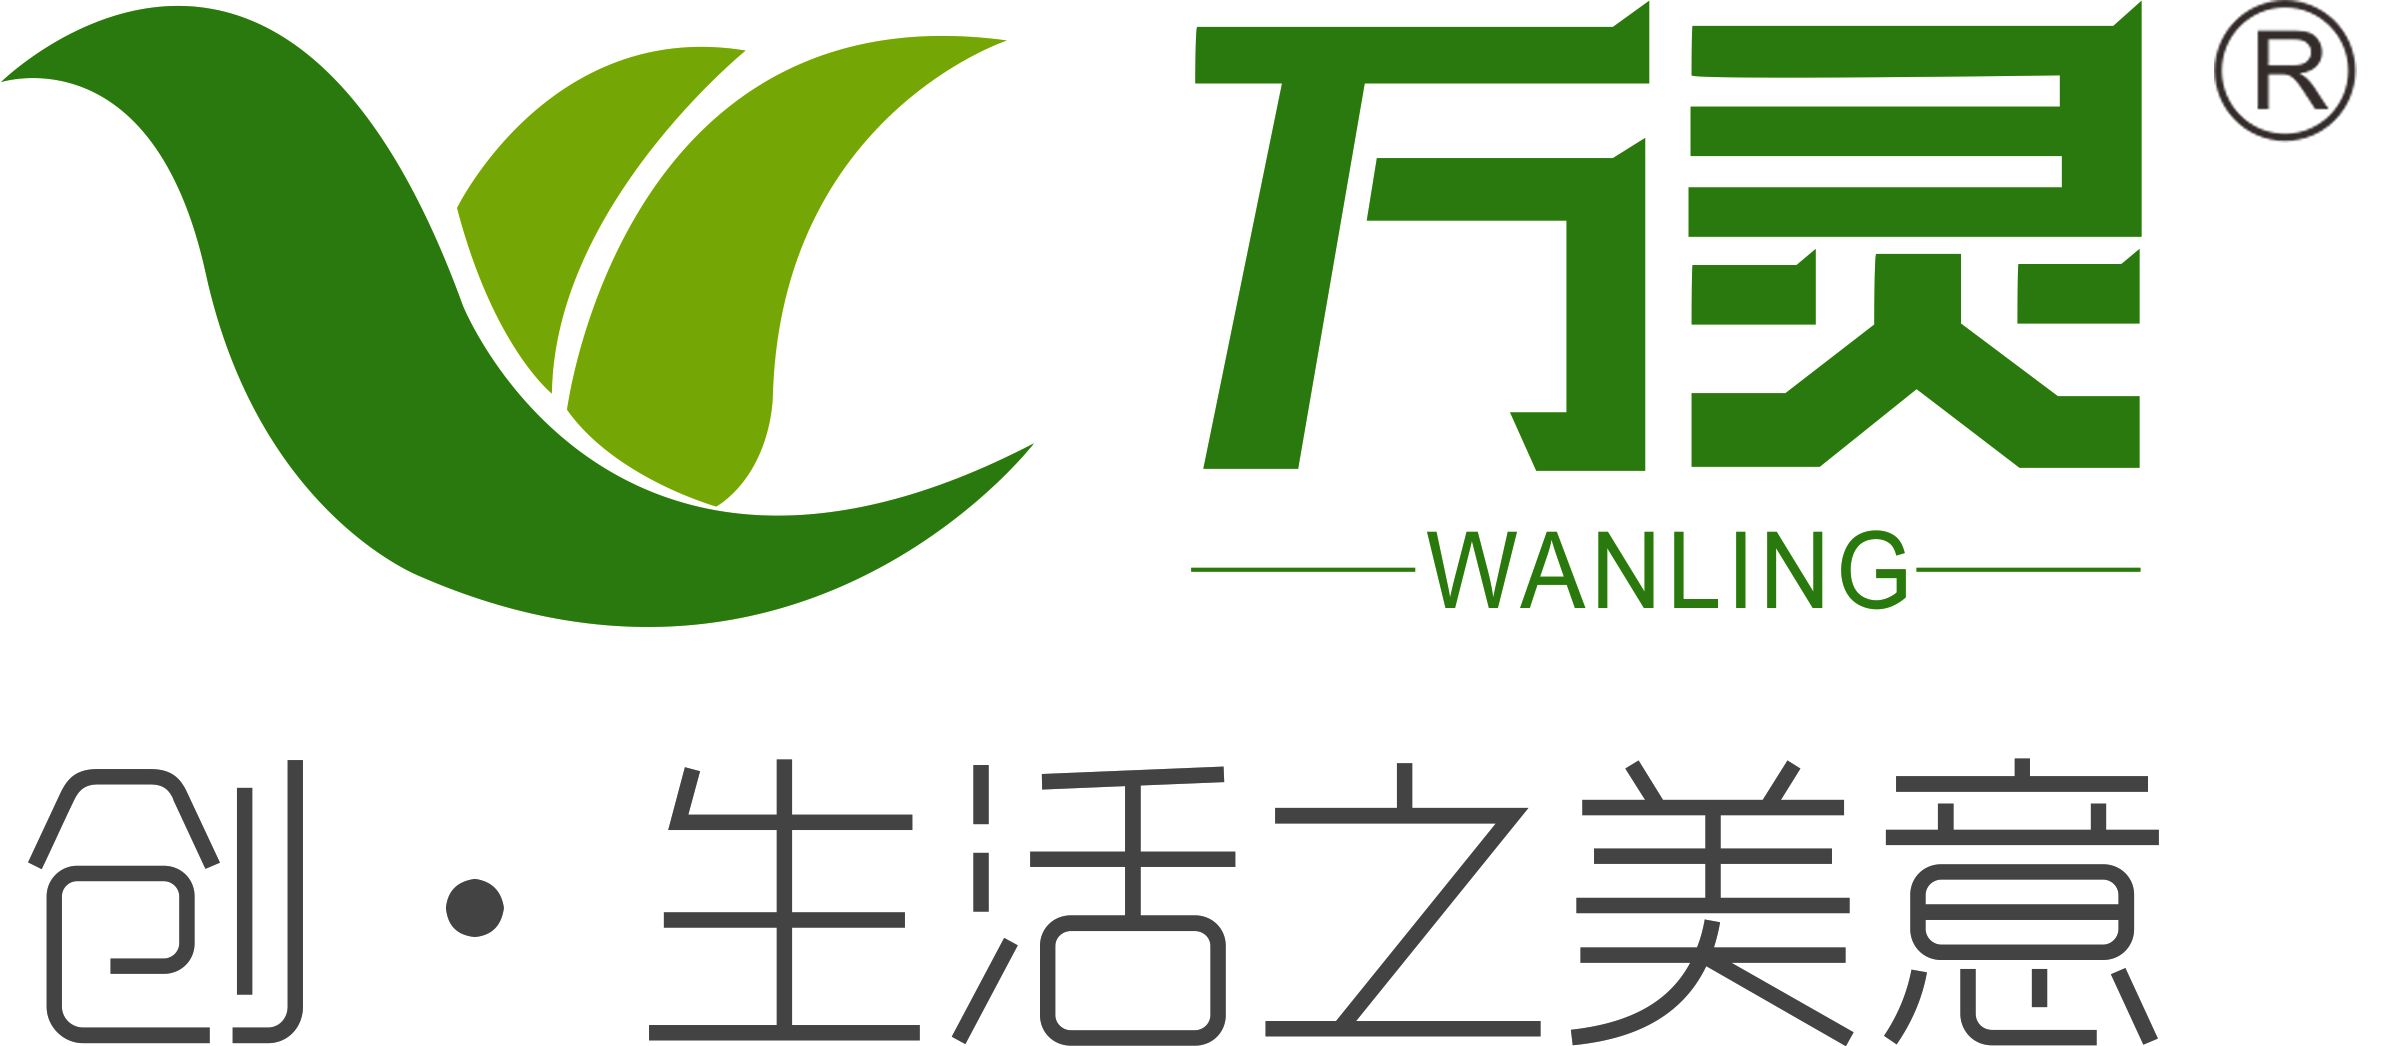 万灵logo